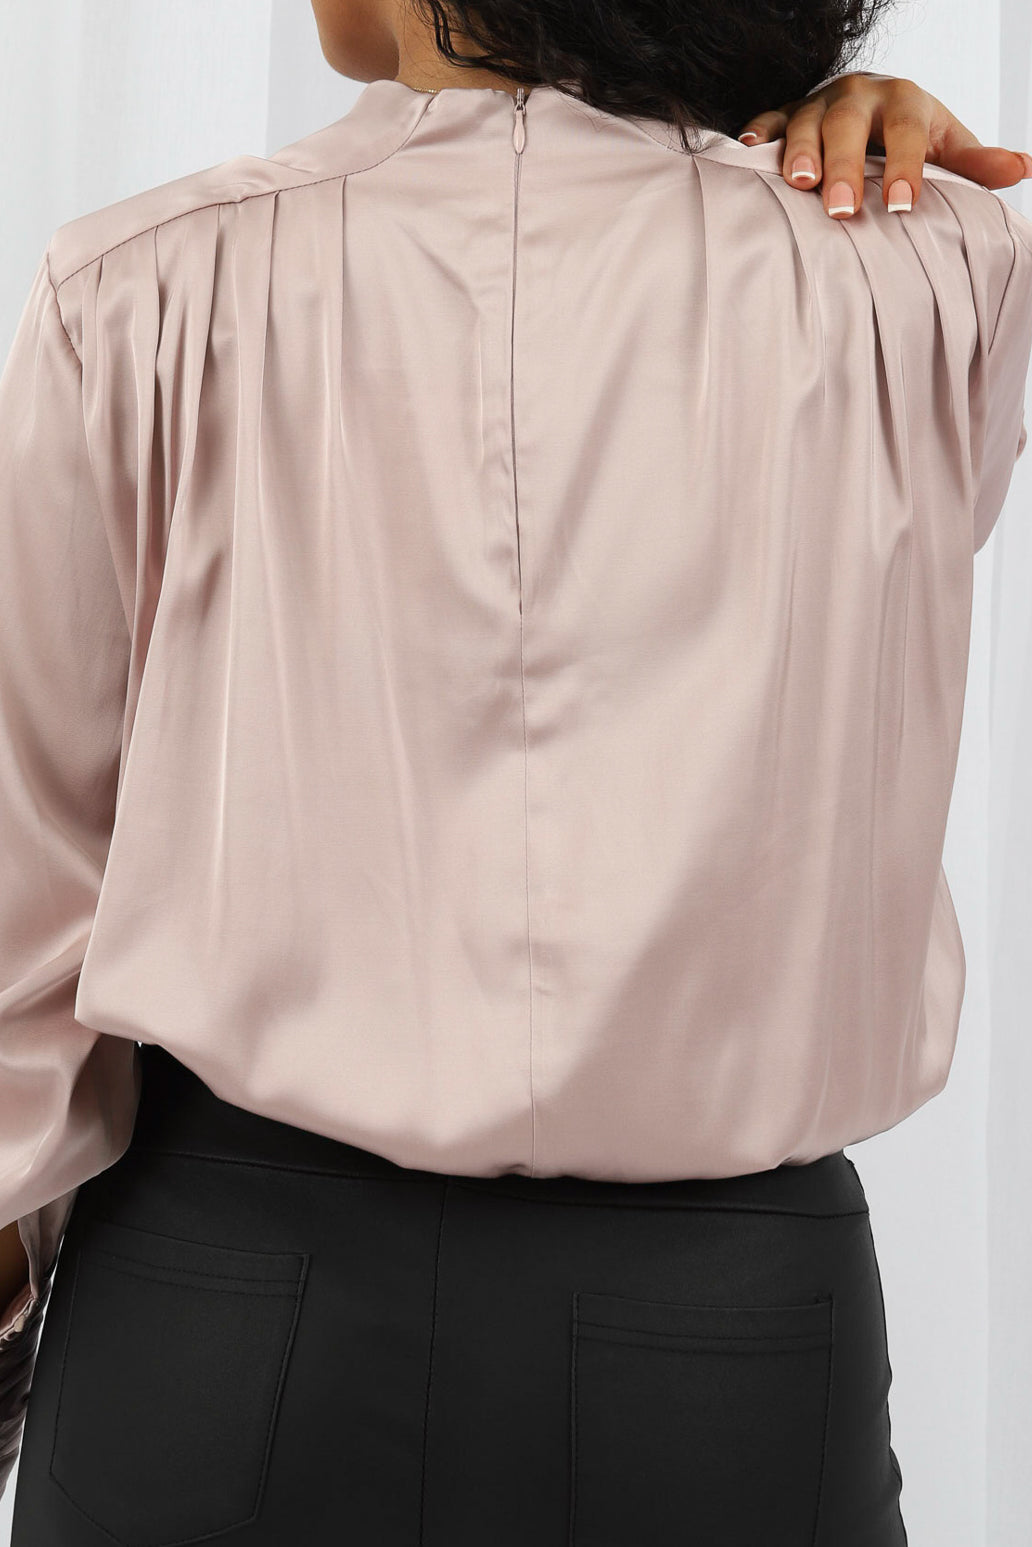 M7907Dustypink-blouse